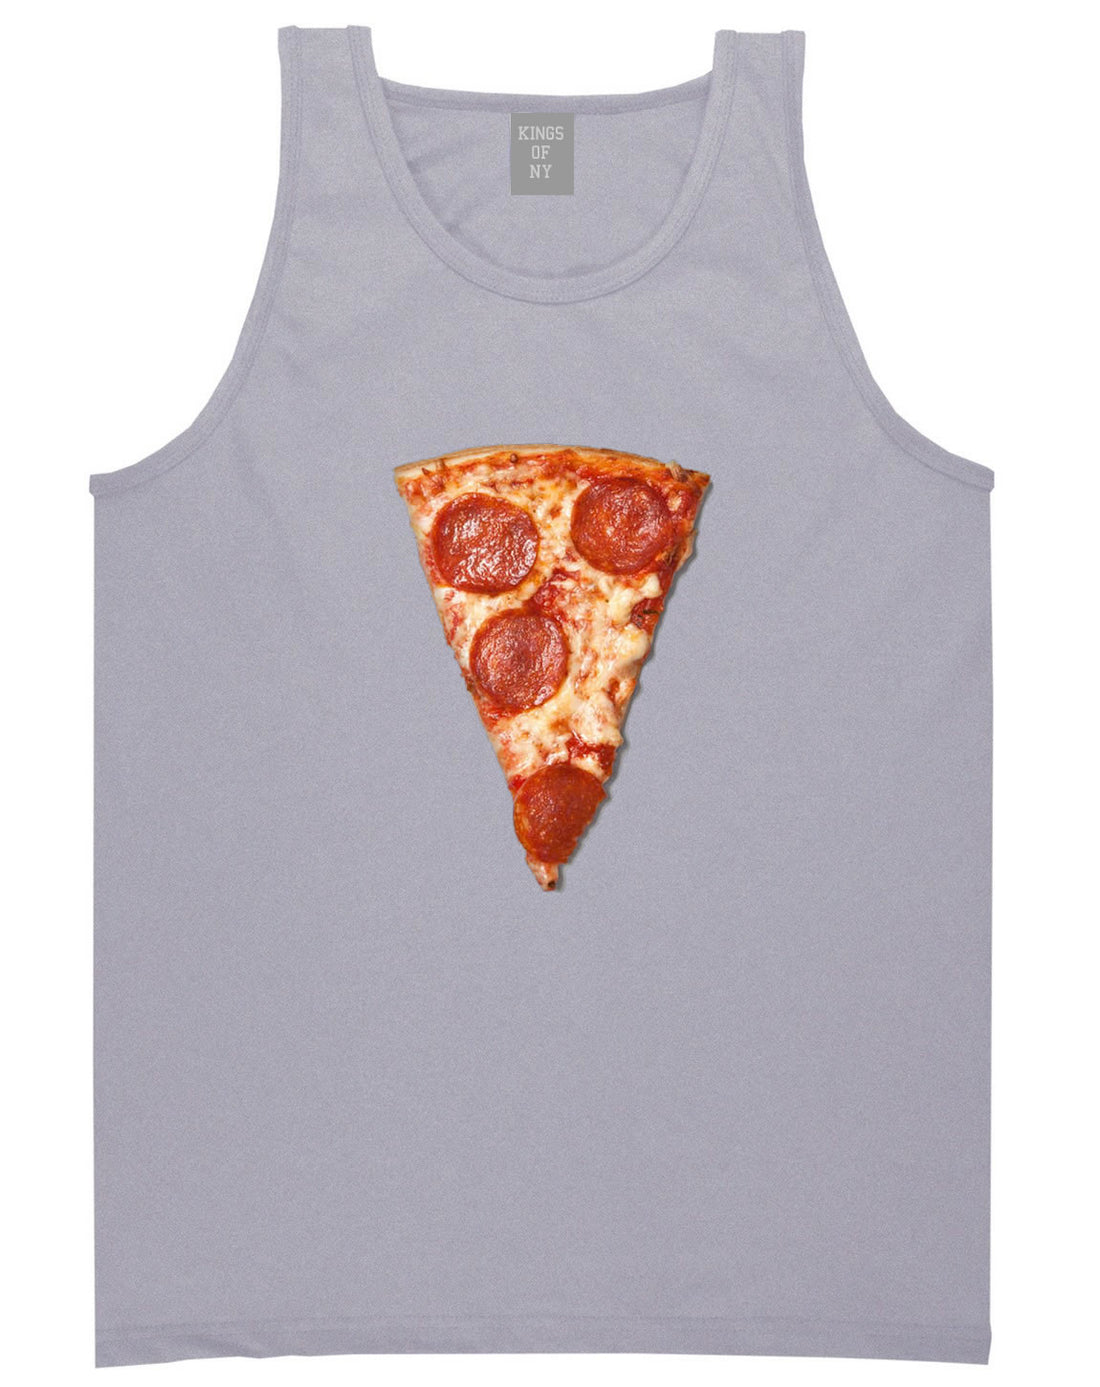 Real Pizza with Pepperoni Emoji Meme Tank Top